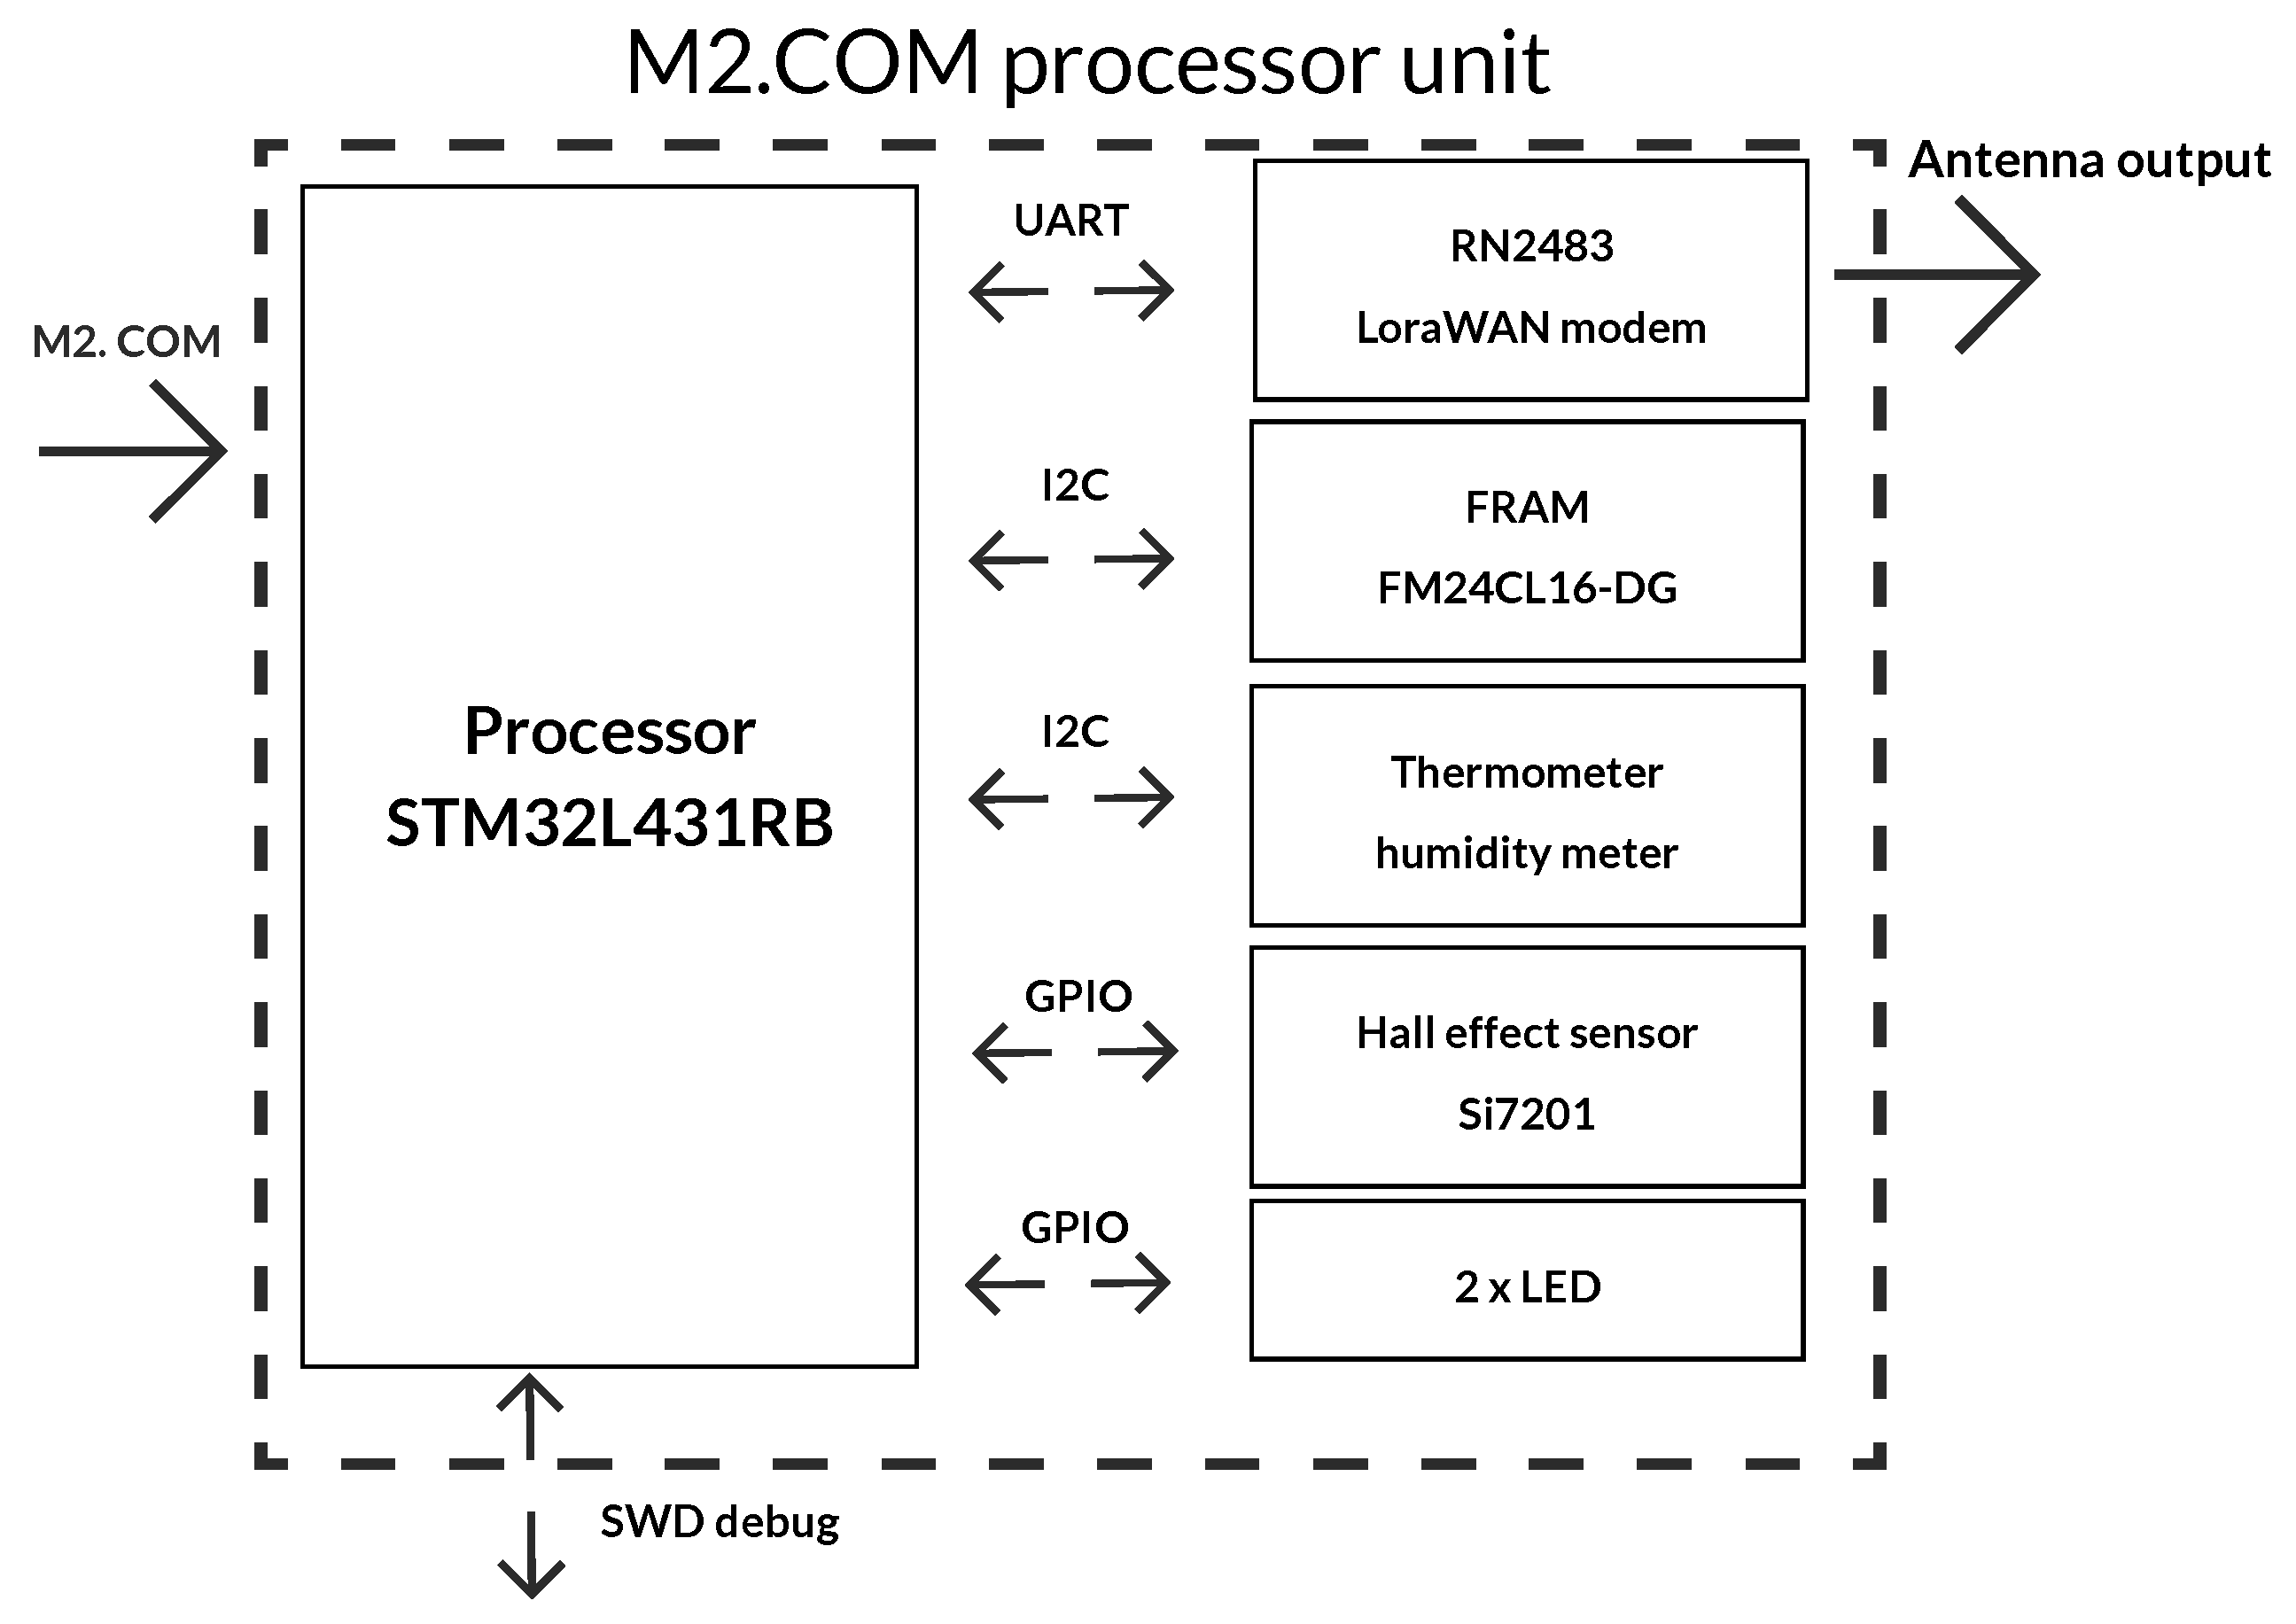 FRAM FM24CL16 F-RAM Serial 3.3V Memory I2C female connector Development Module 